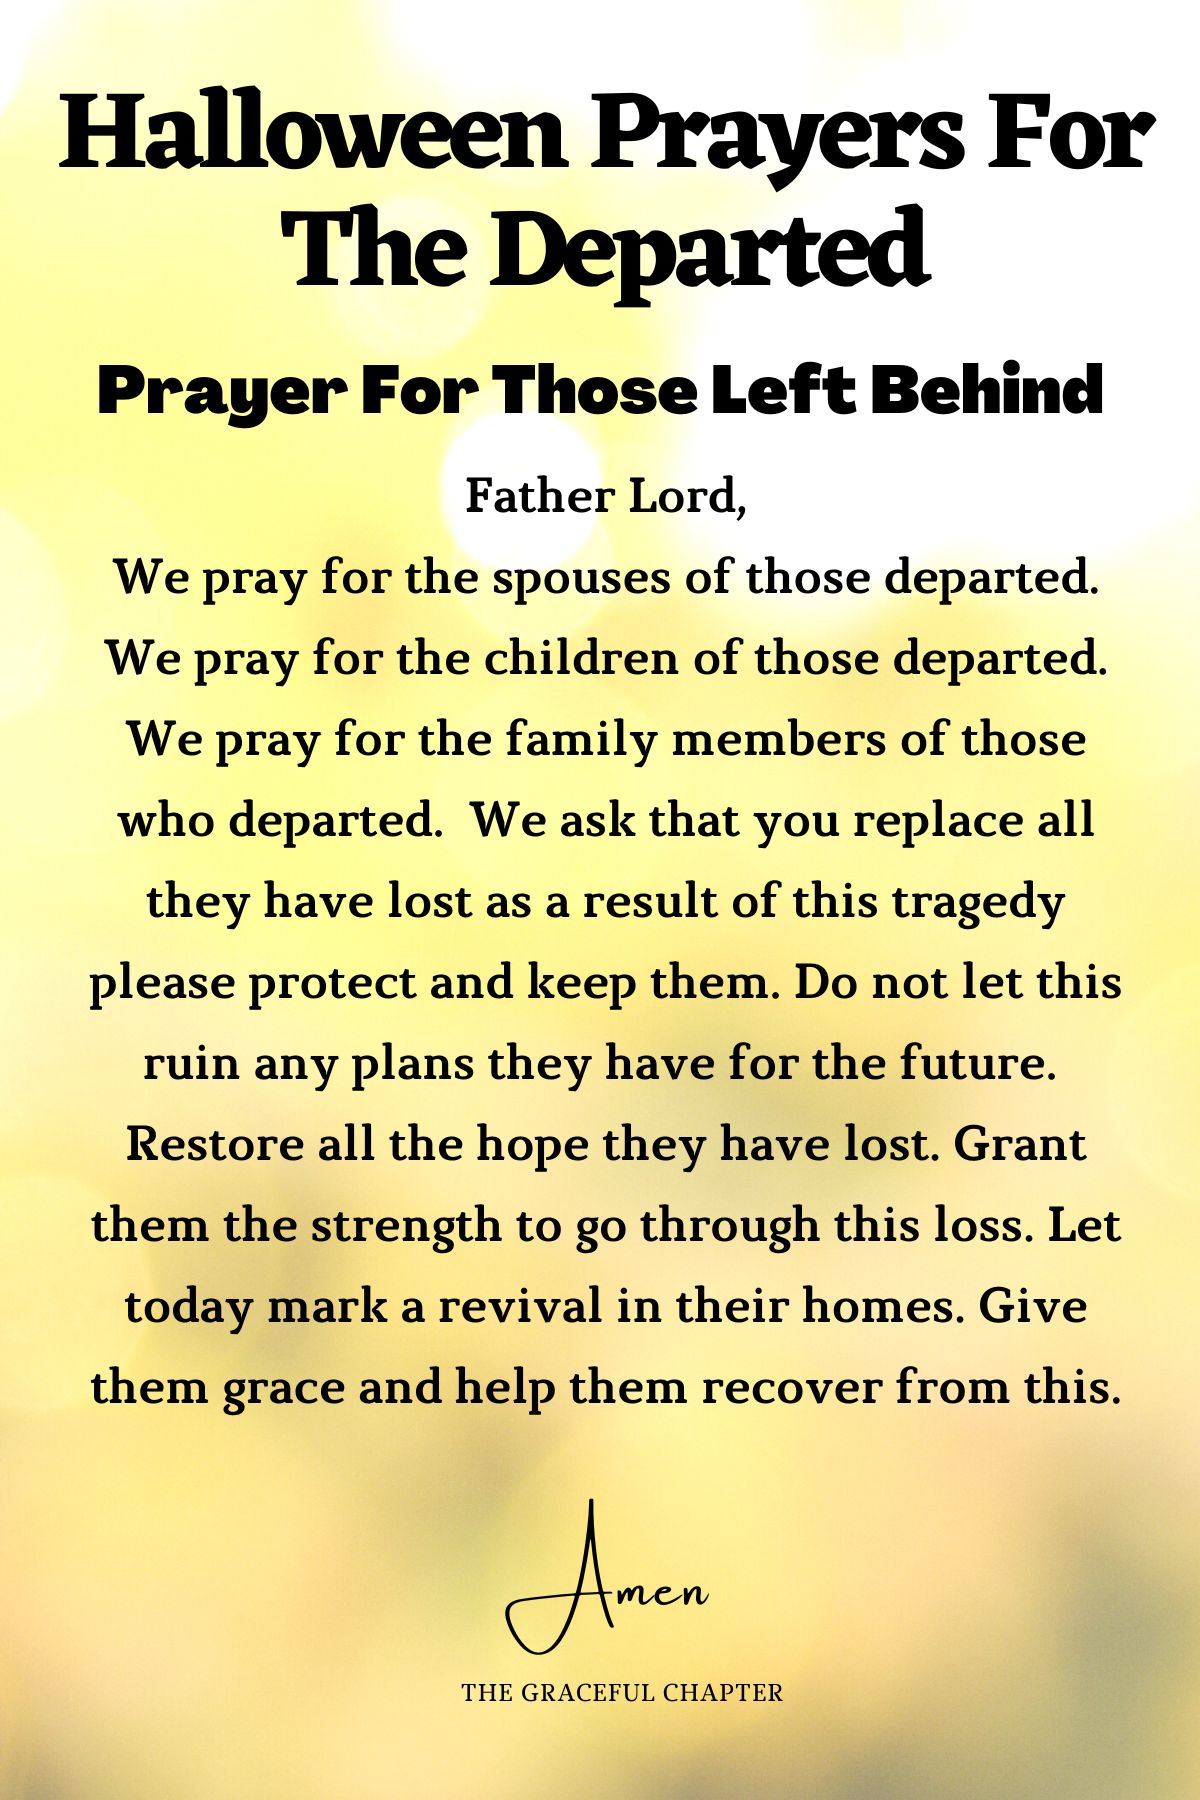 Prayer for those left behind